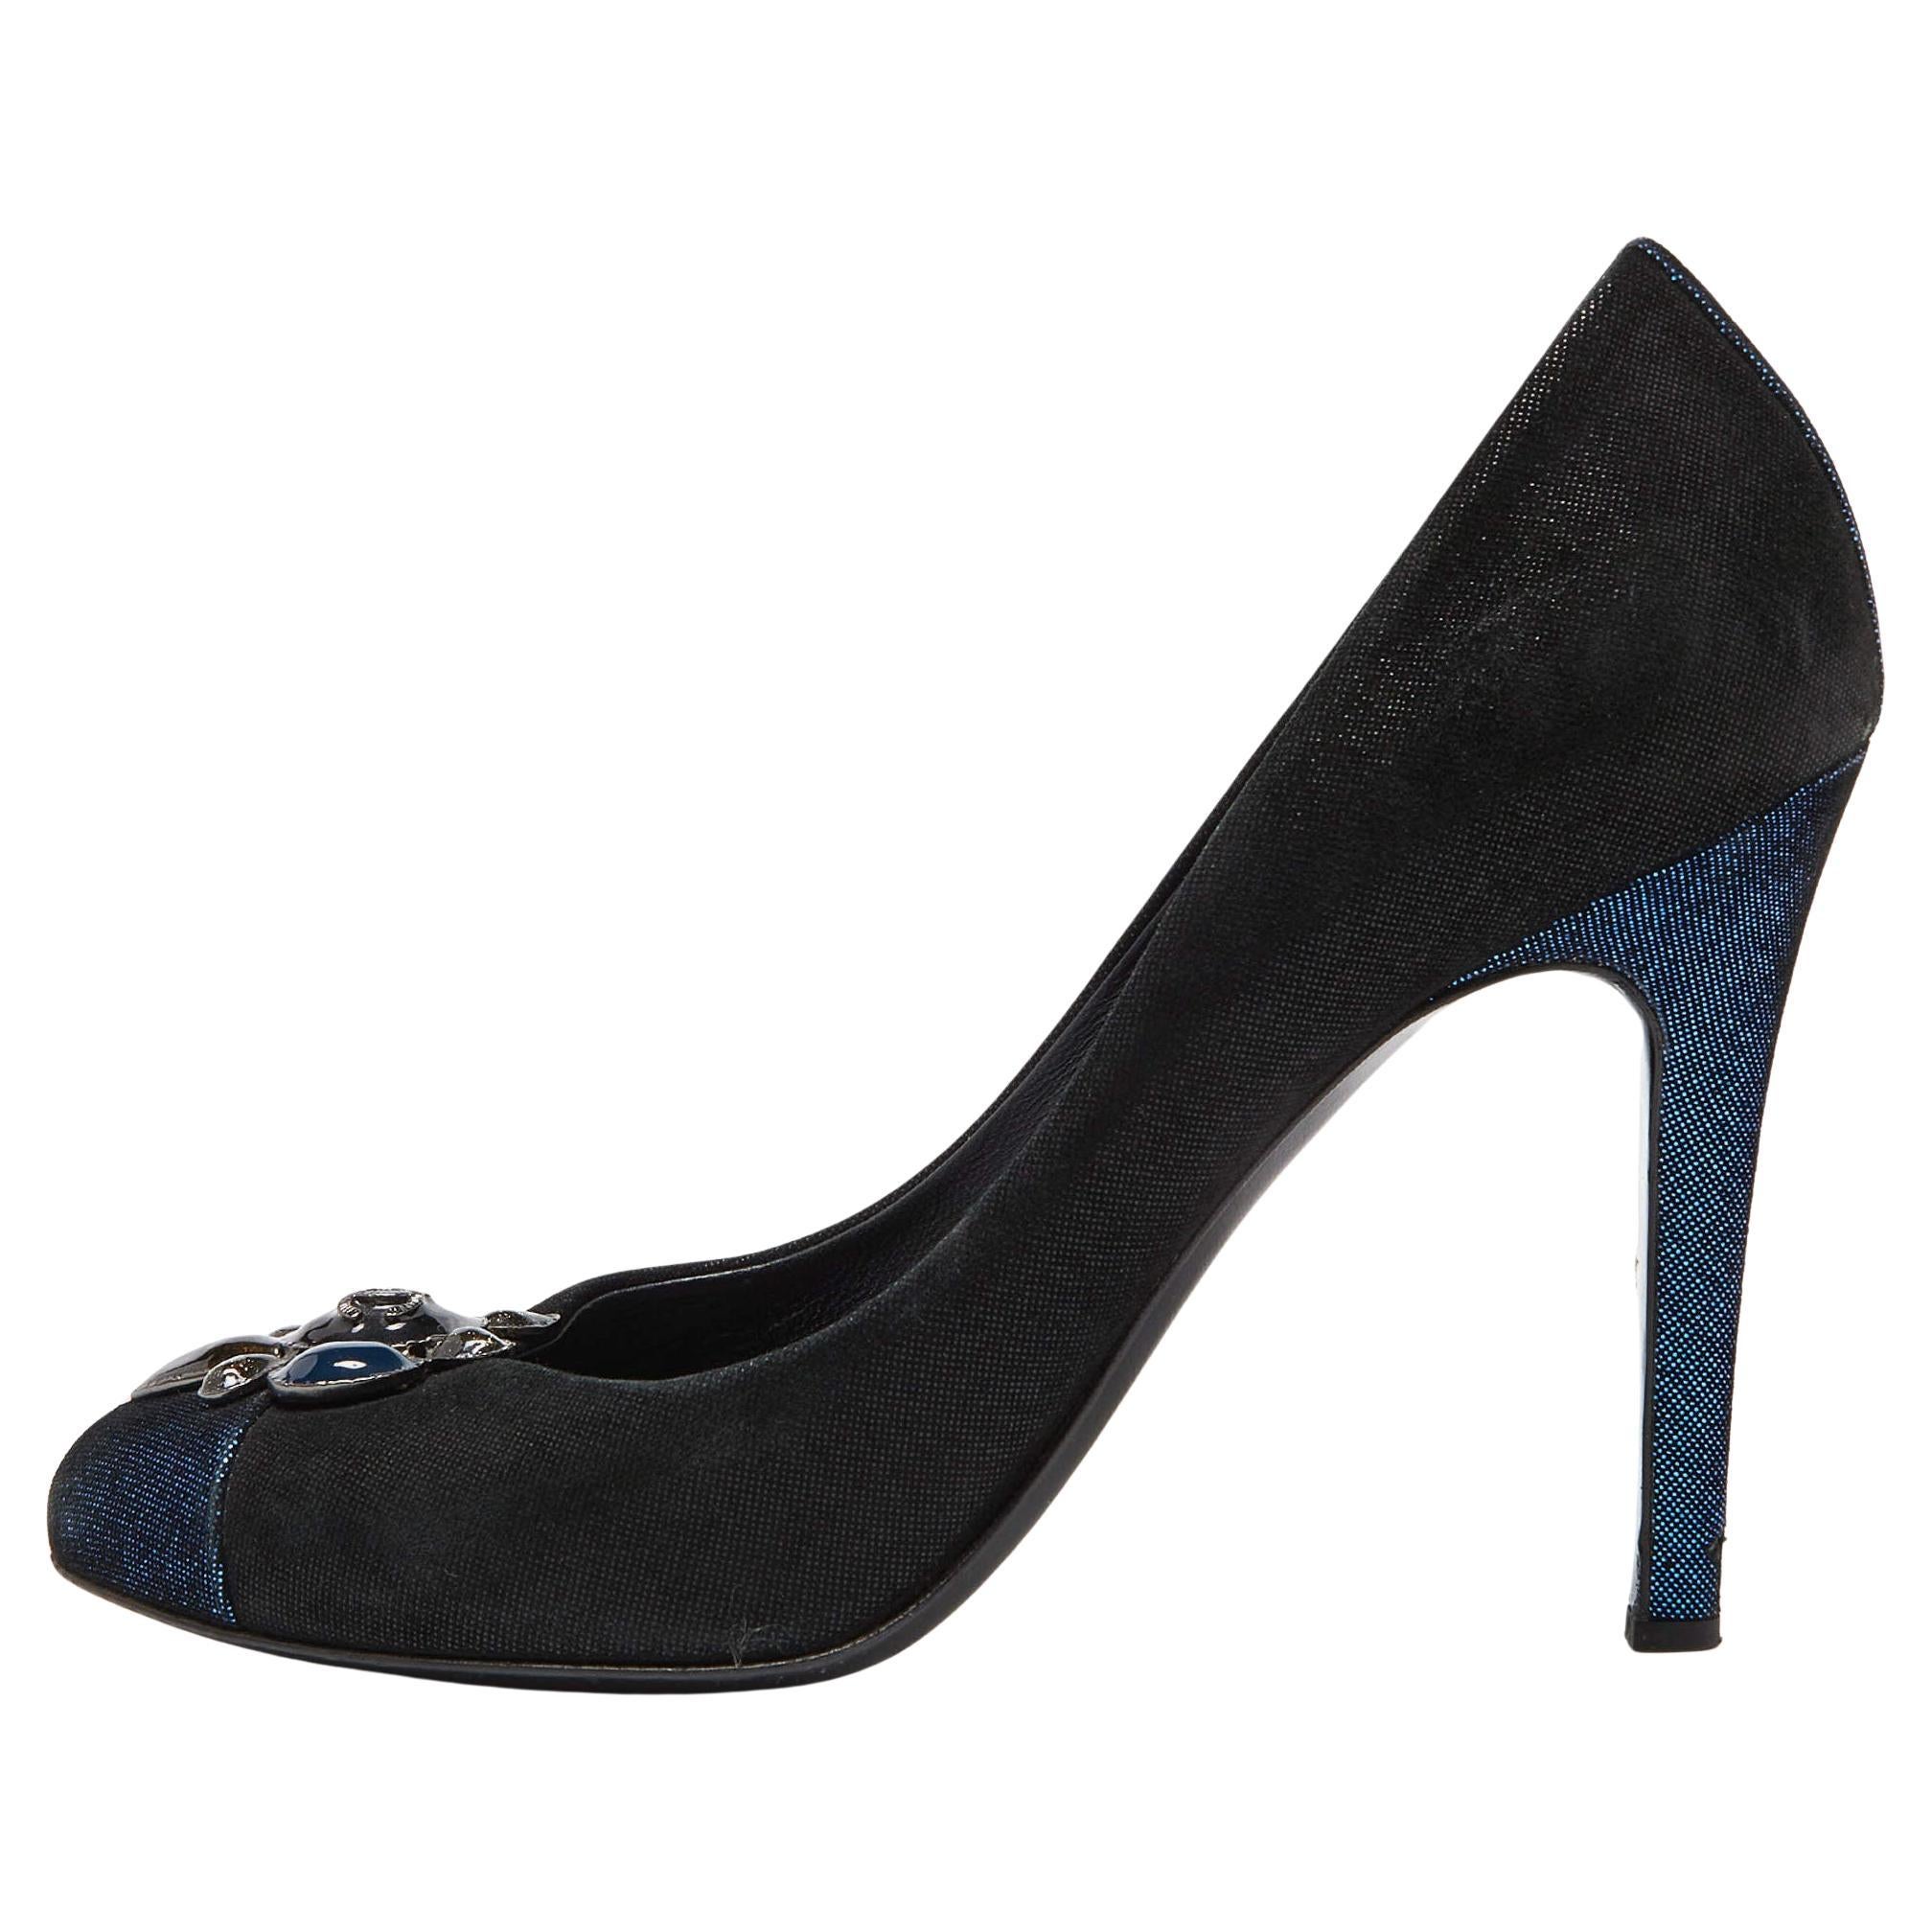 Chanel Black/Blue Suede Embellished CC Cap Toe Pumps Size 39.5 For Sale